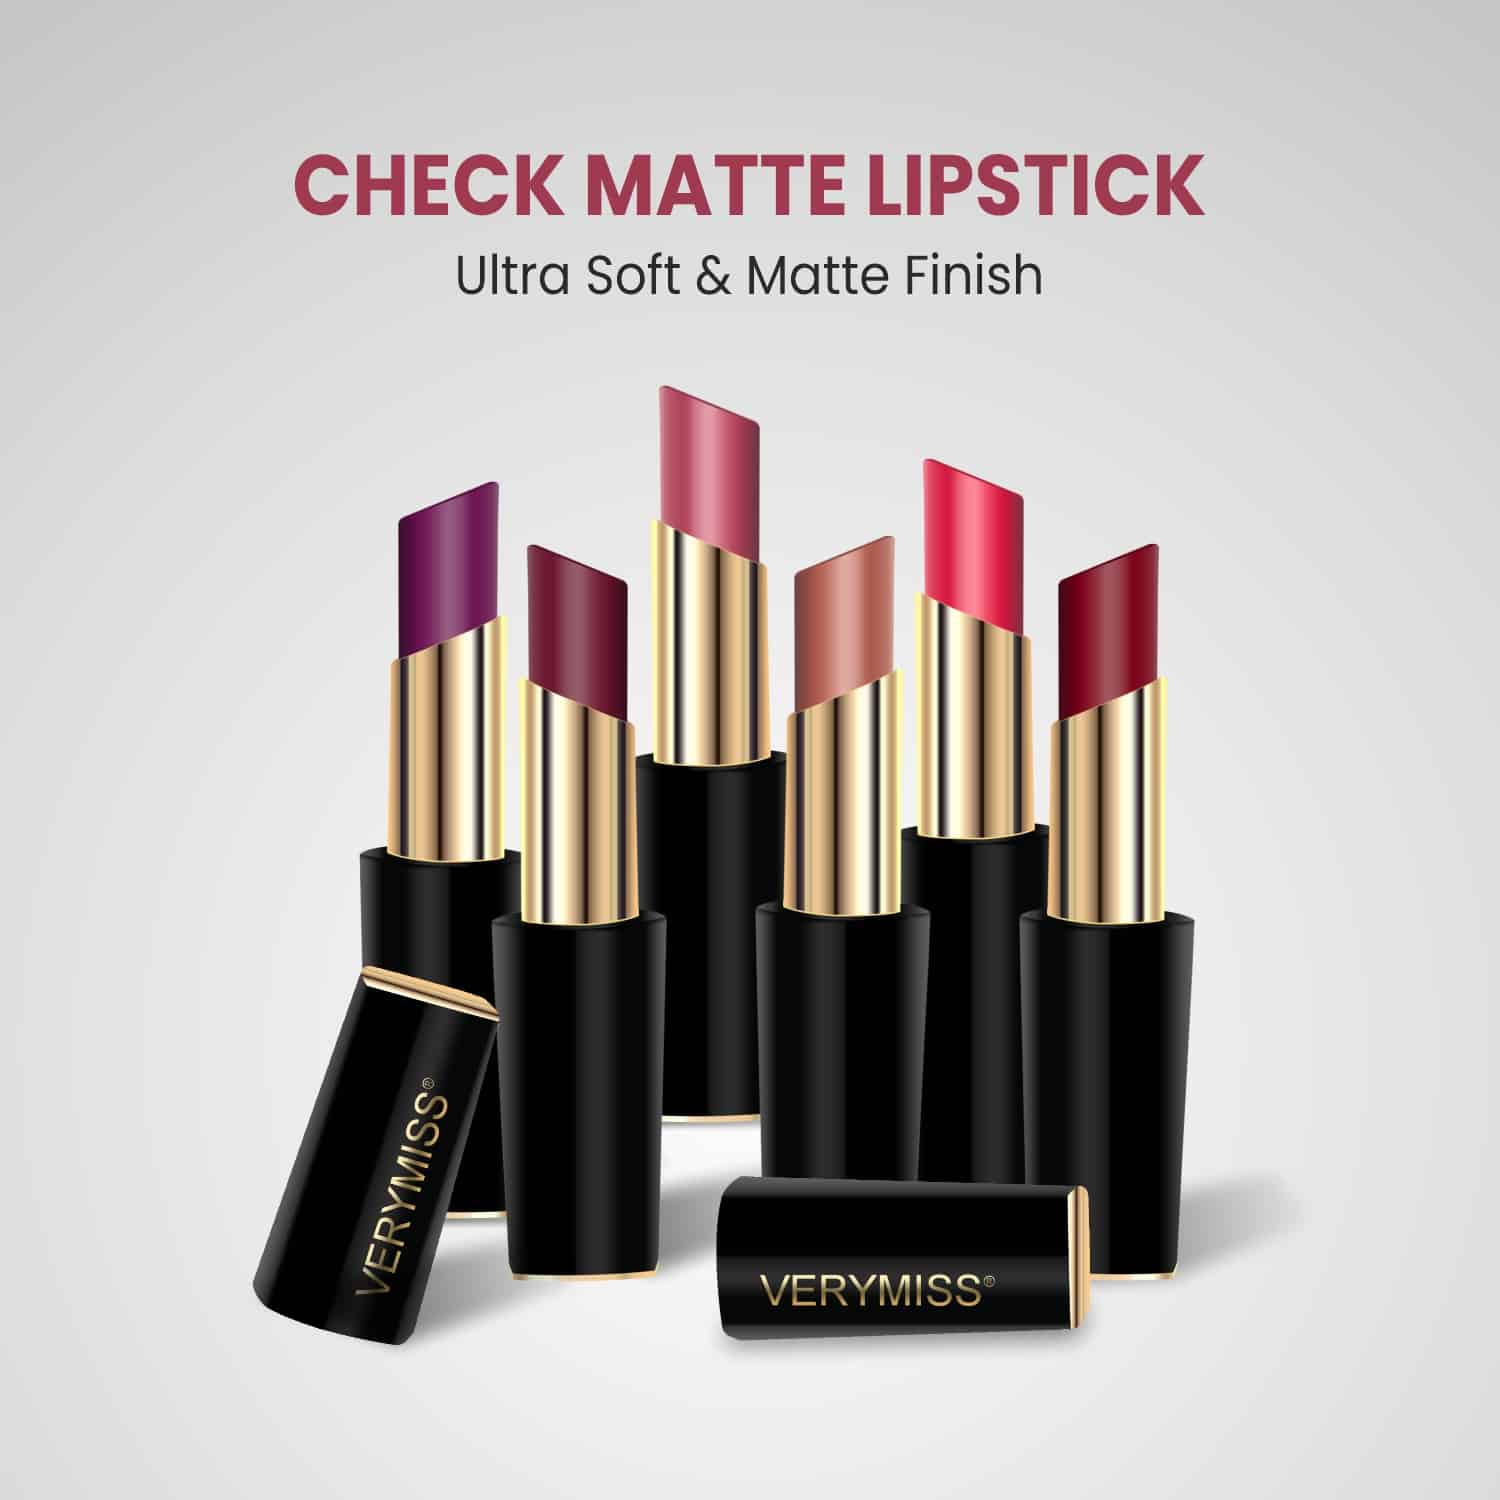 Check Matte Lipstick - 10 Just Right Red